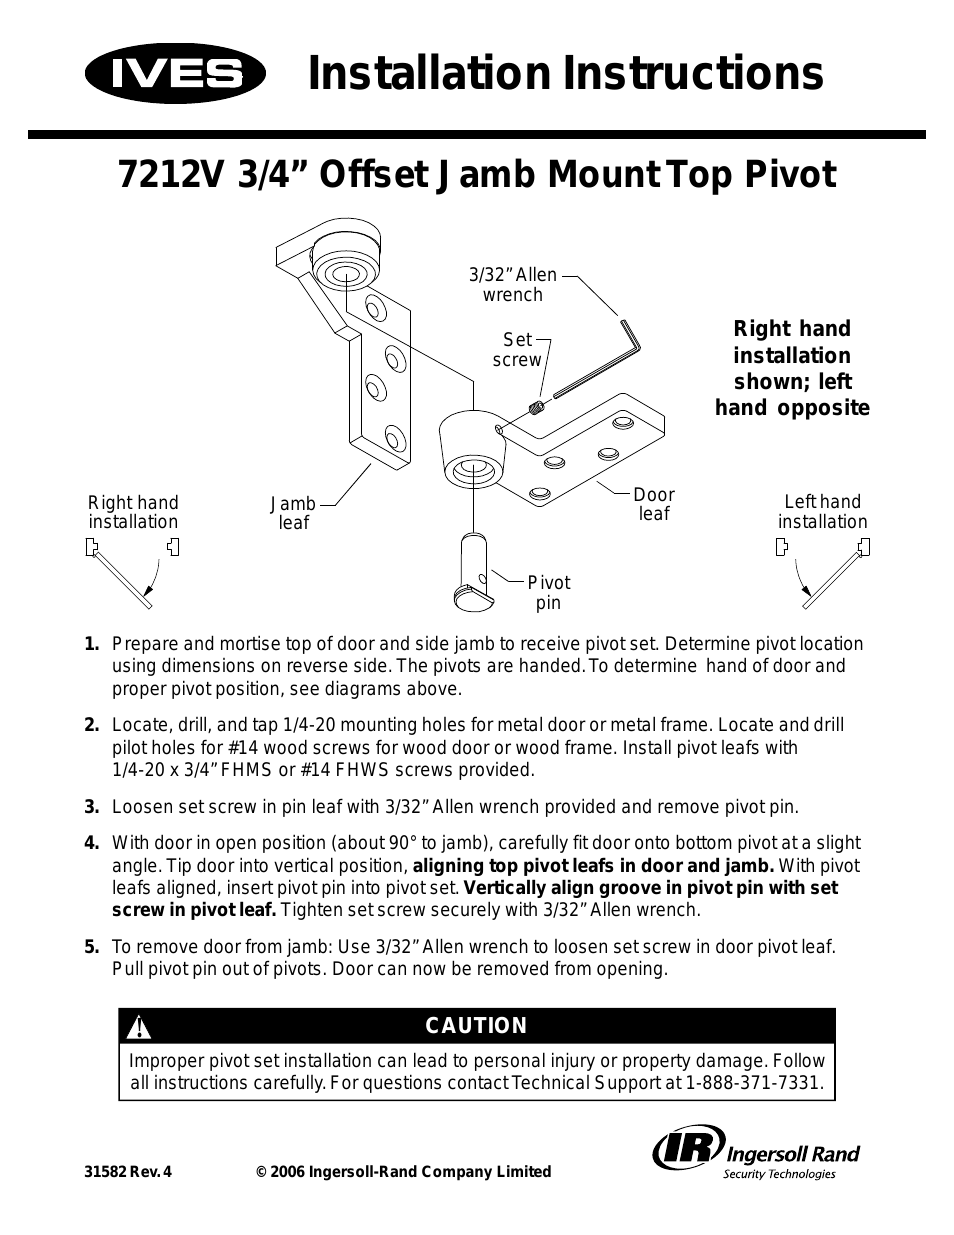 Offset Jamb Mount Top Pivot 7212V